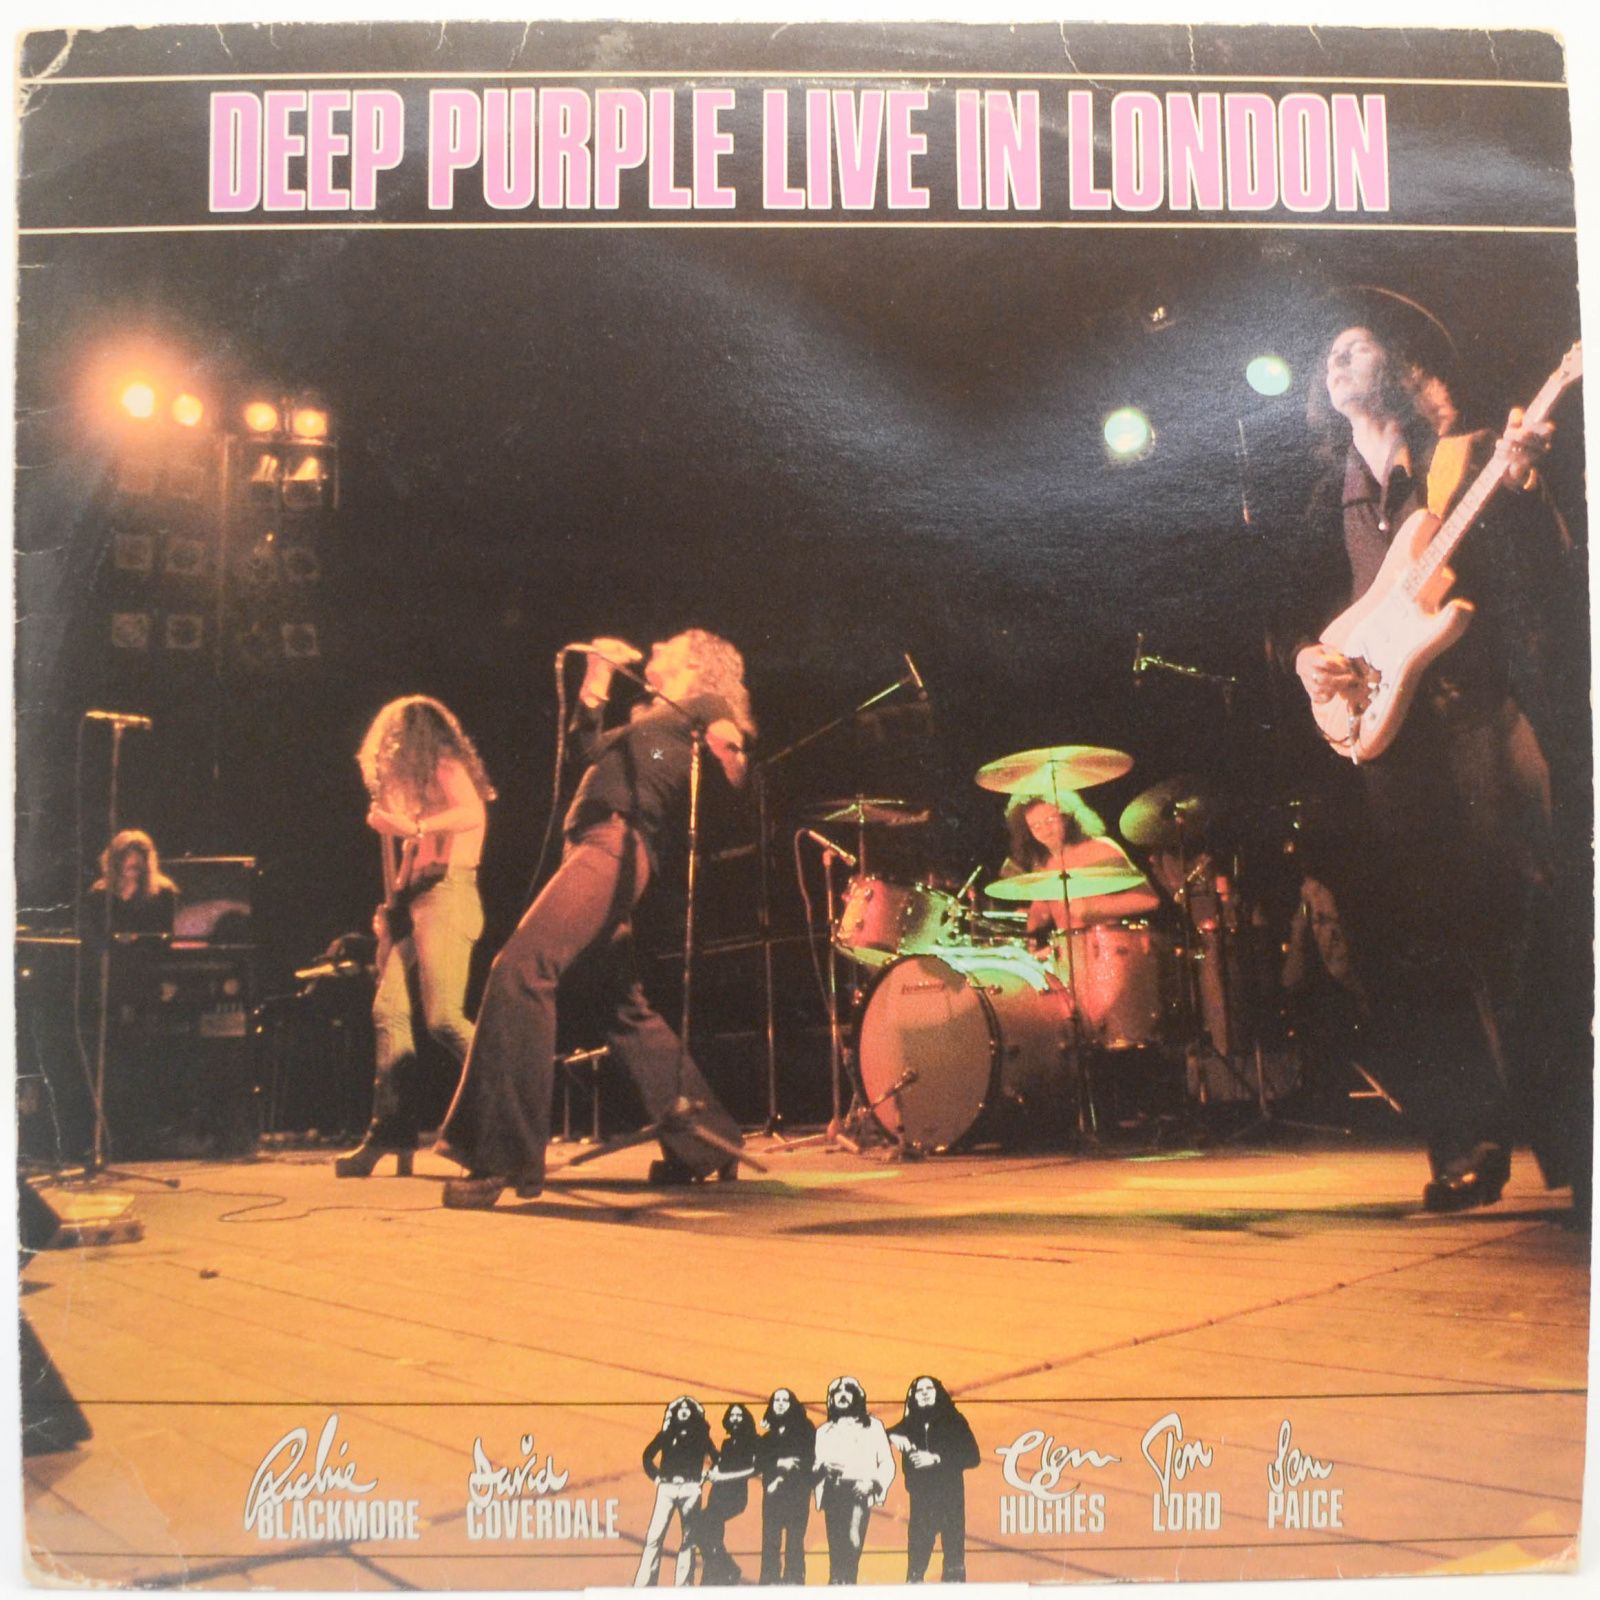 Live In London, 1982